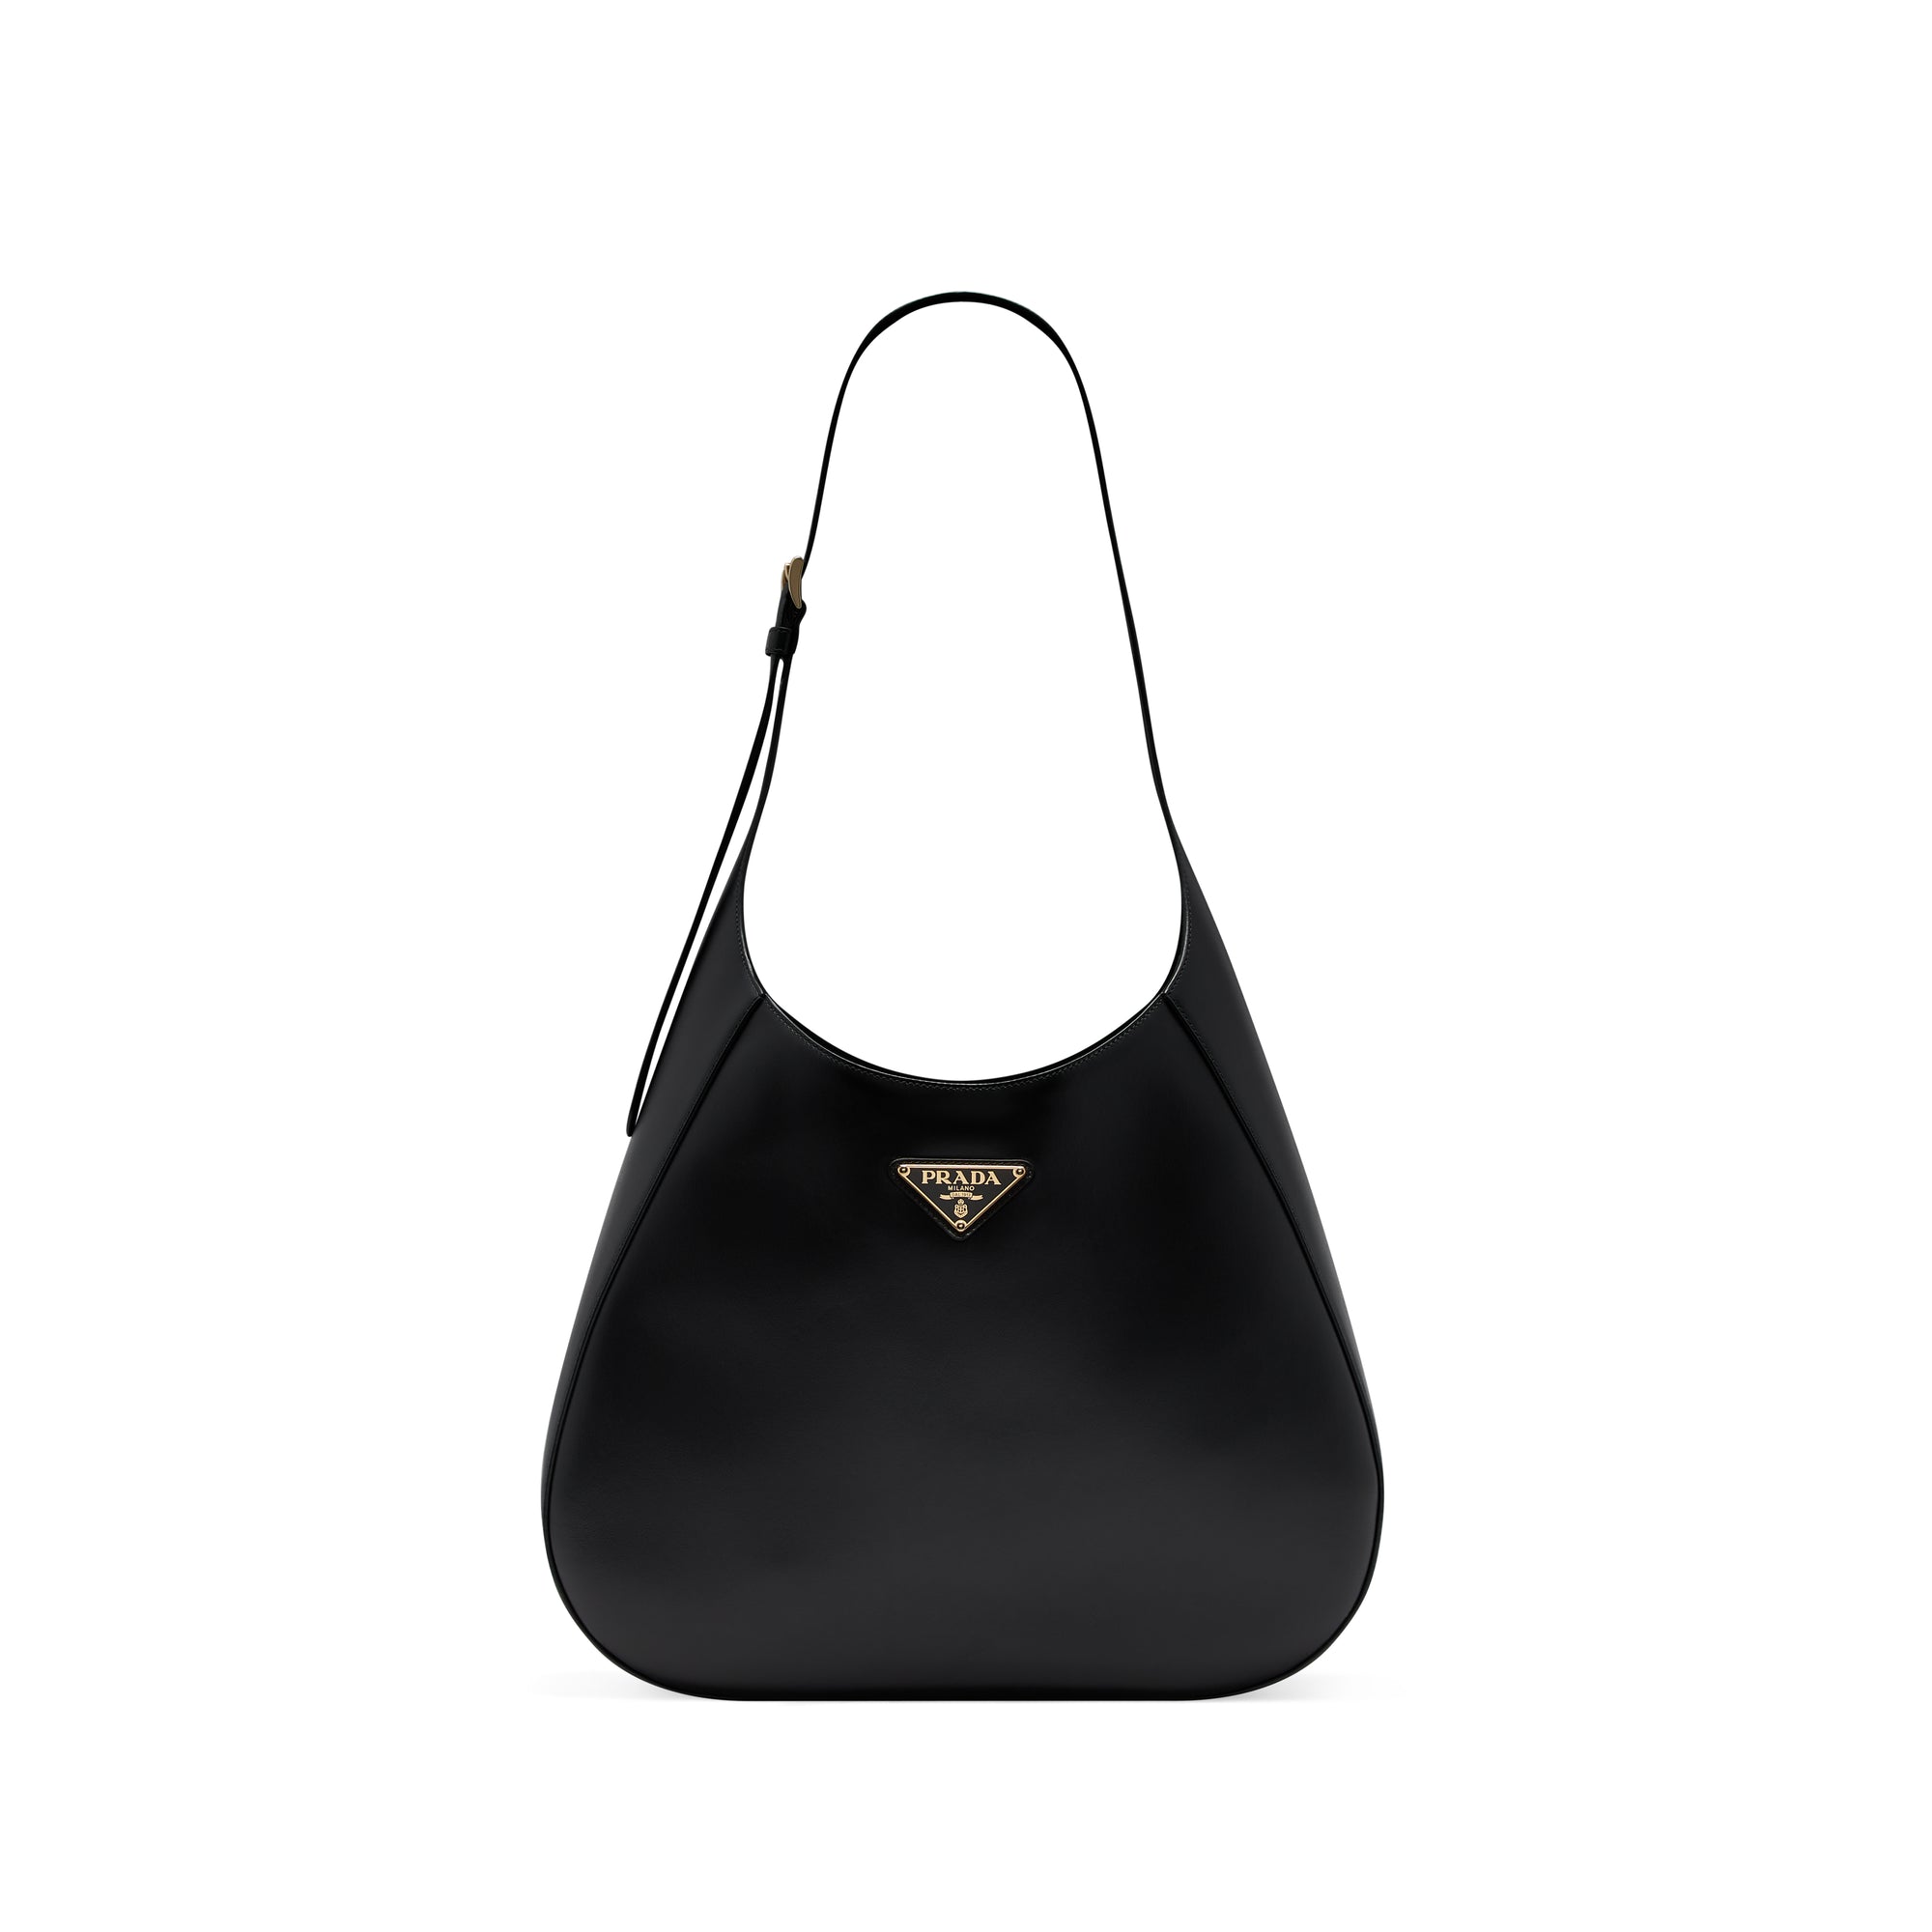 Prada - Women’s Large Leather Shoulder Bag - (Black) view 1